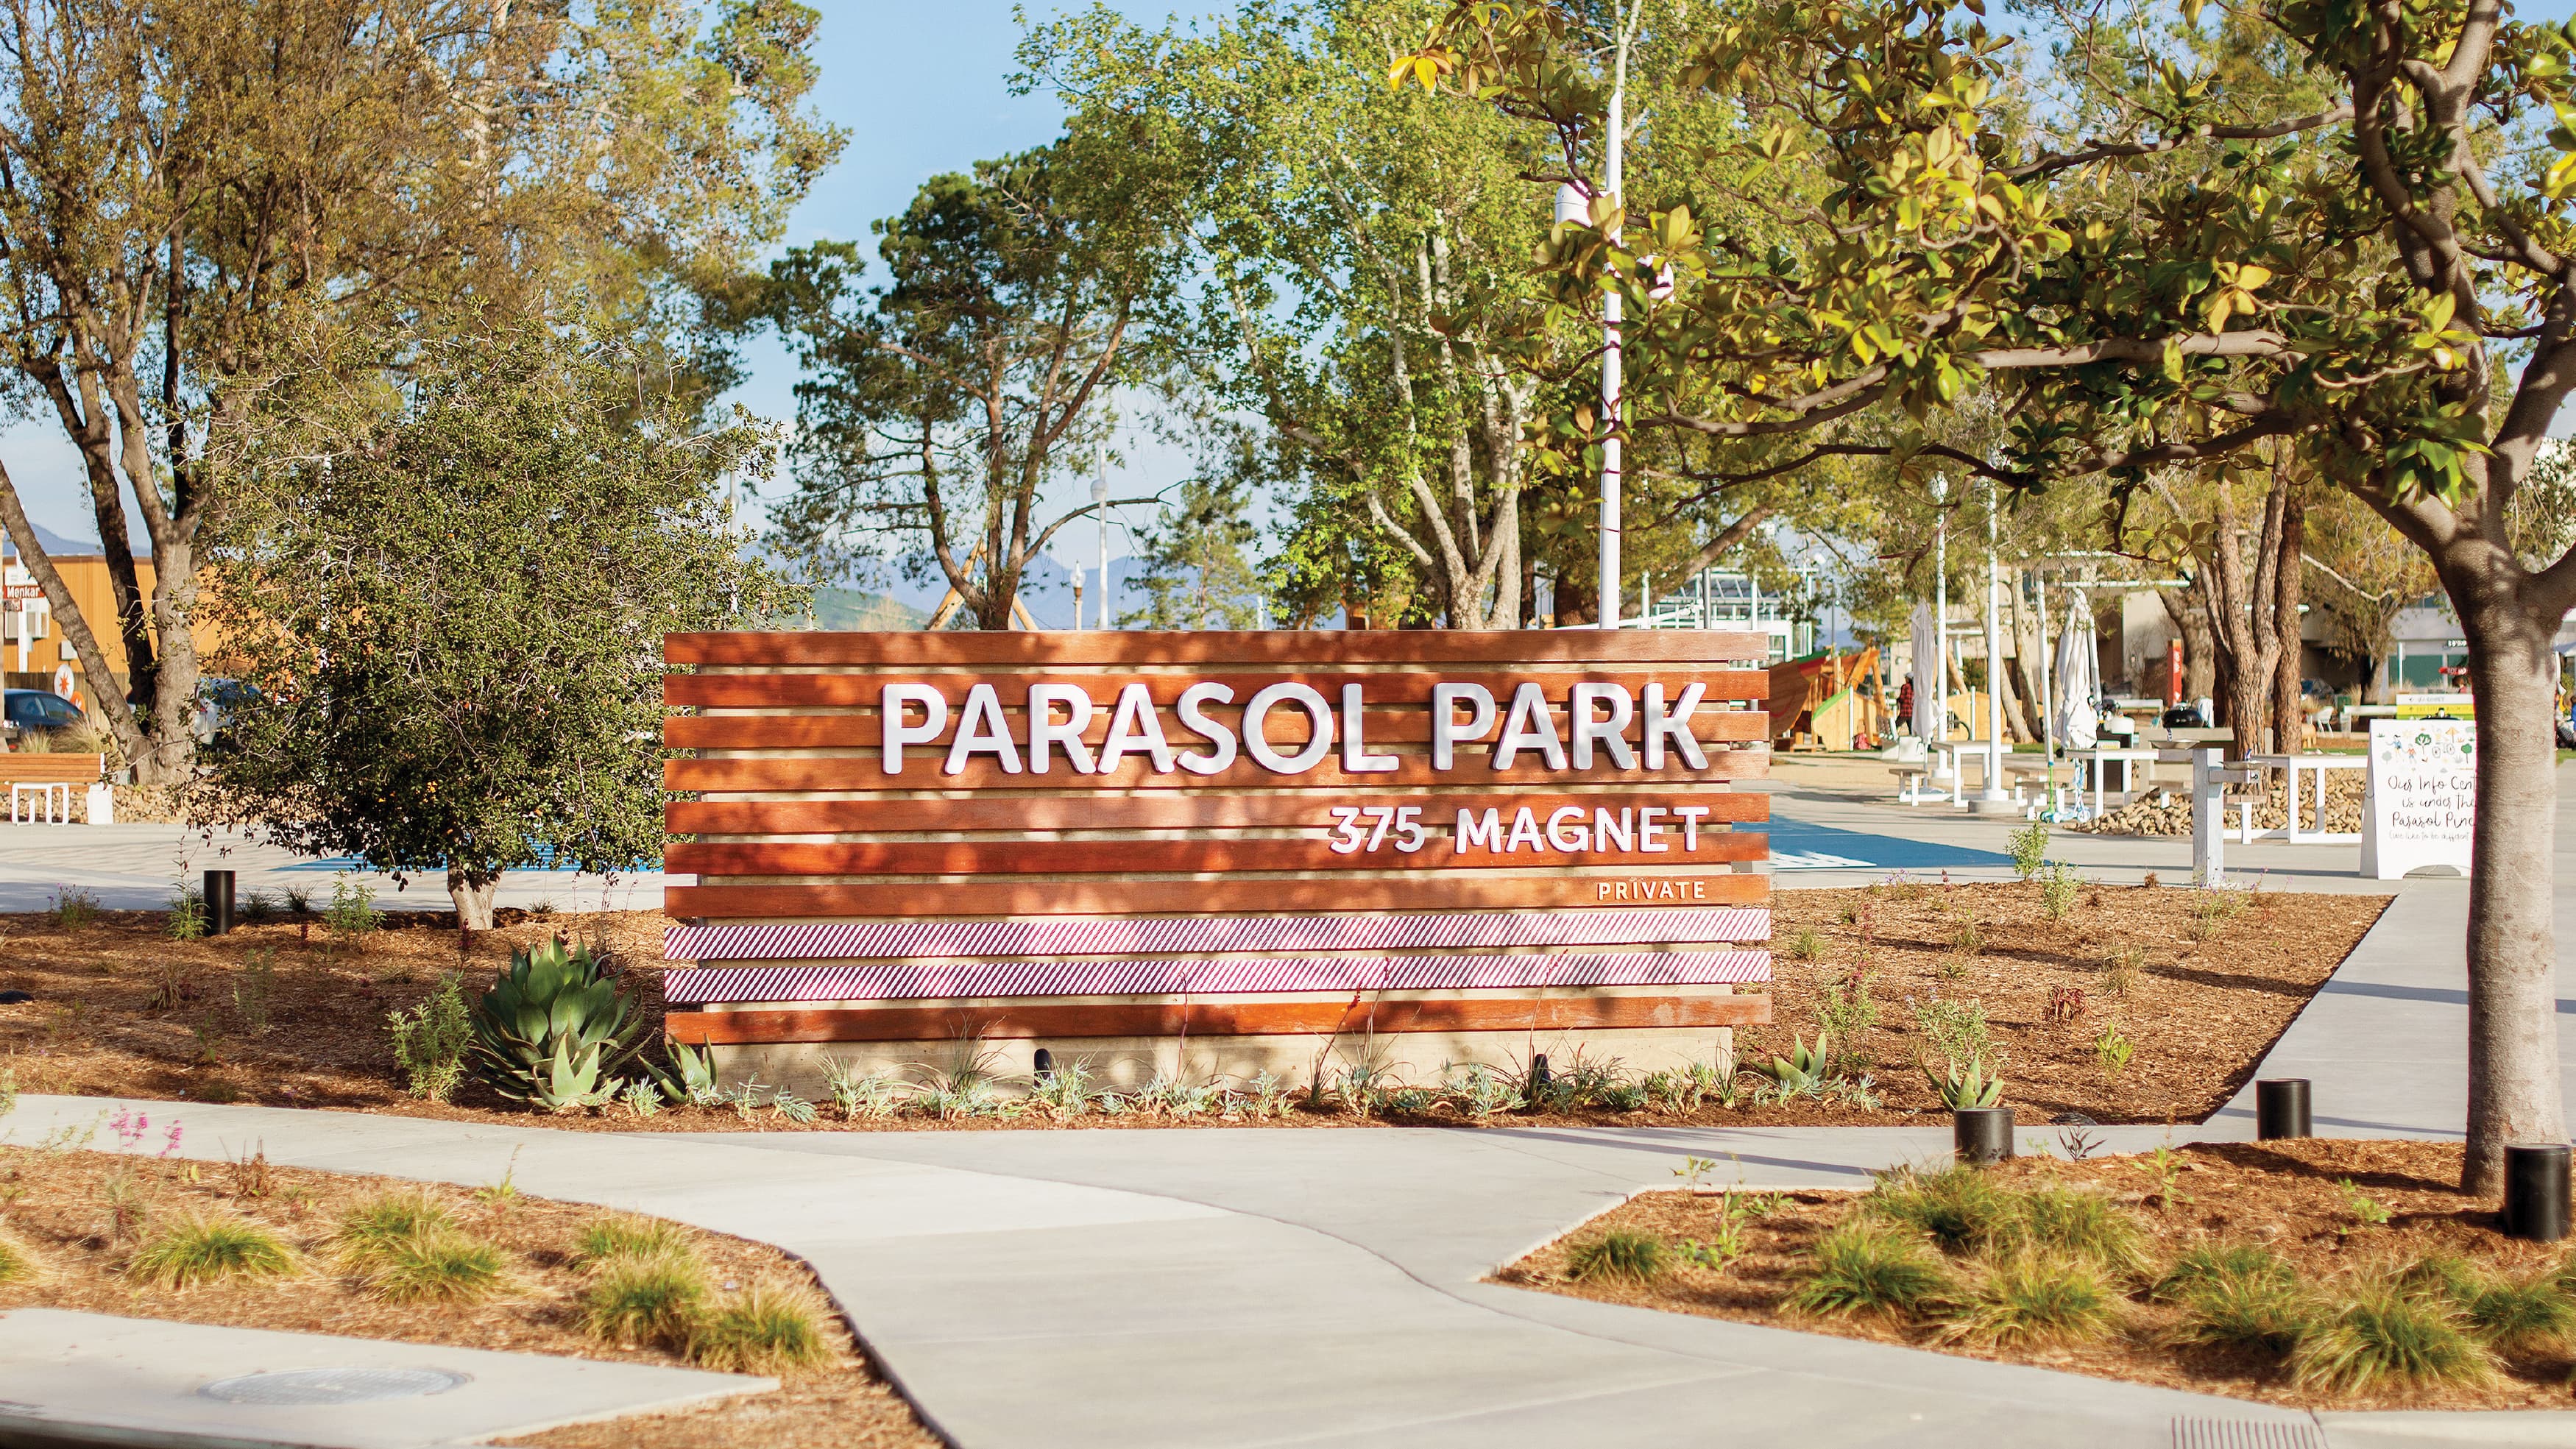 Parasol Park horizontal, wooden-slat sign identity integrated into the landscape